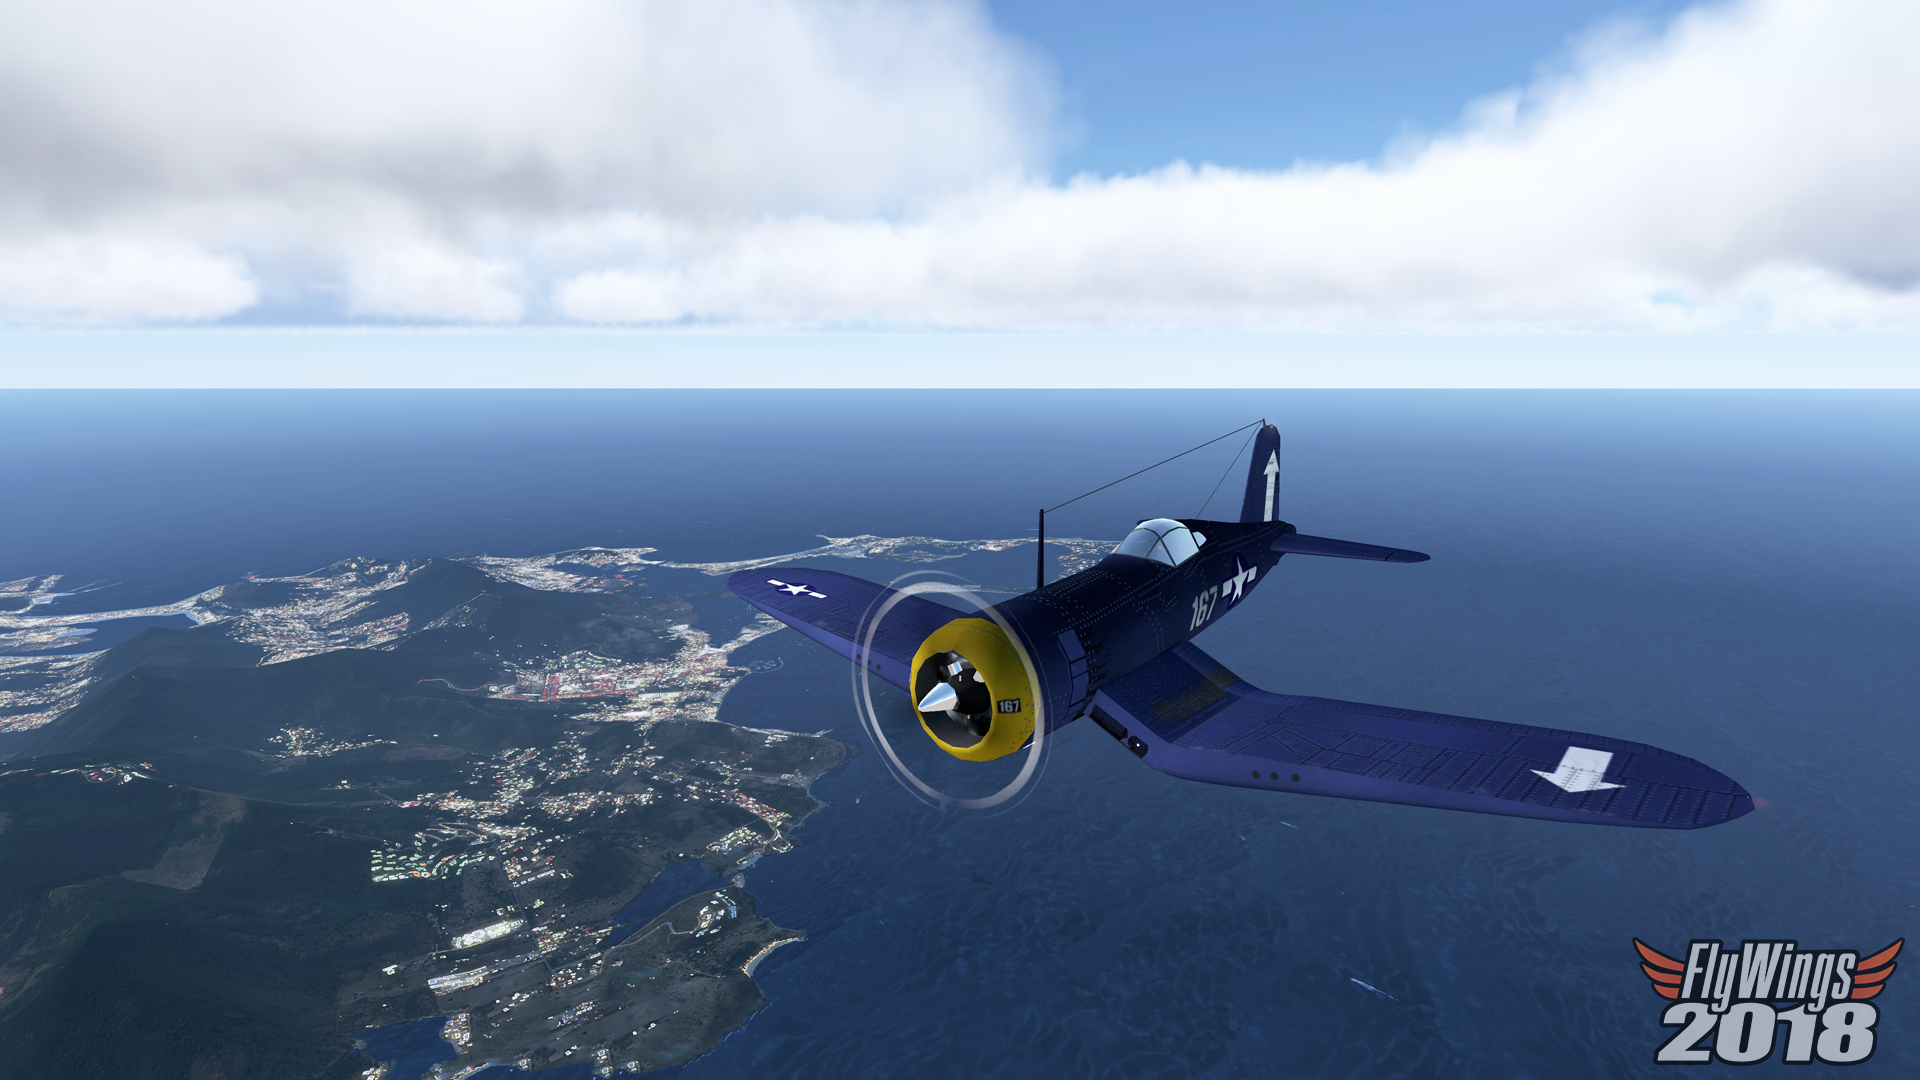 FlyWings 2018 Flight Simulator Free Download for PC